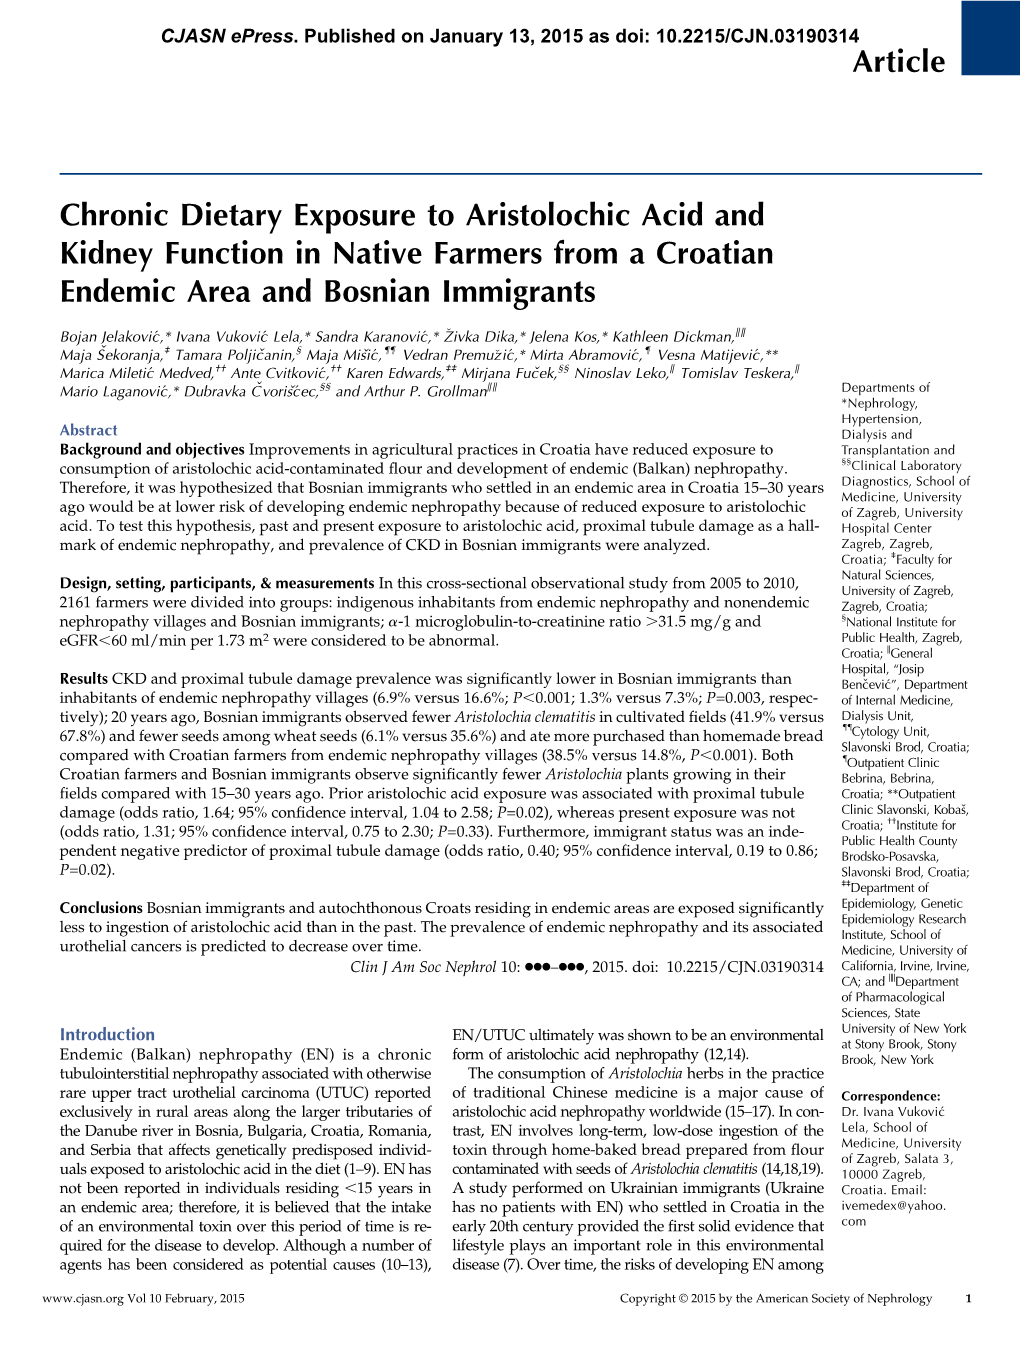 Article Chronic Dietary Exposure to Aristolochic Acid And